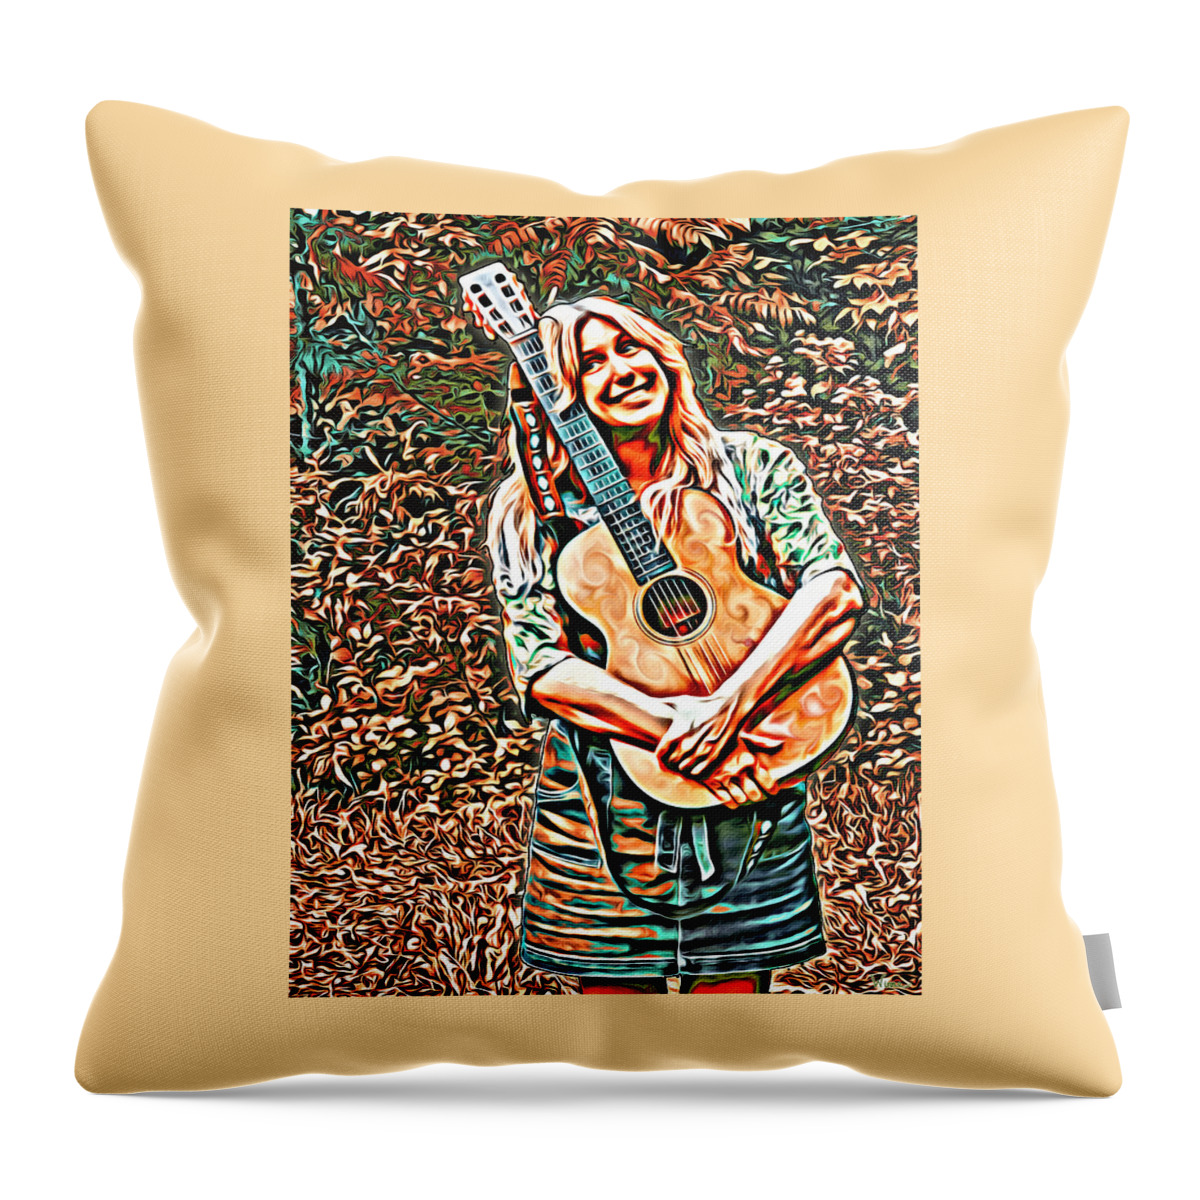 Lise Winne Throw Pillow featuring the digital art Self Portrait with Guitar by Lise Winne